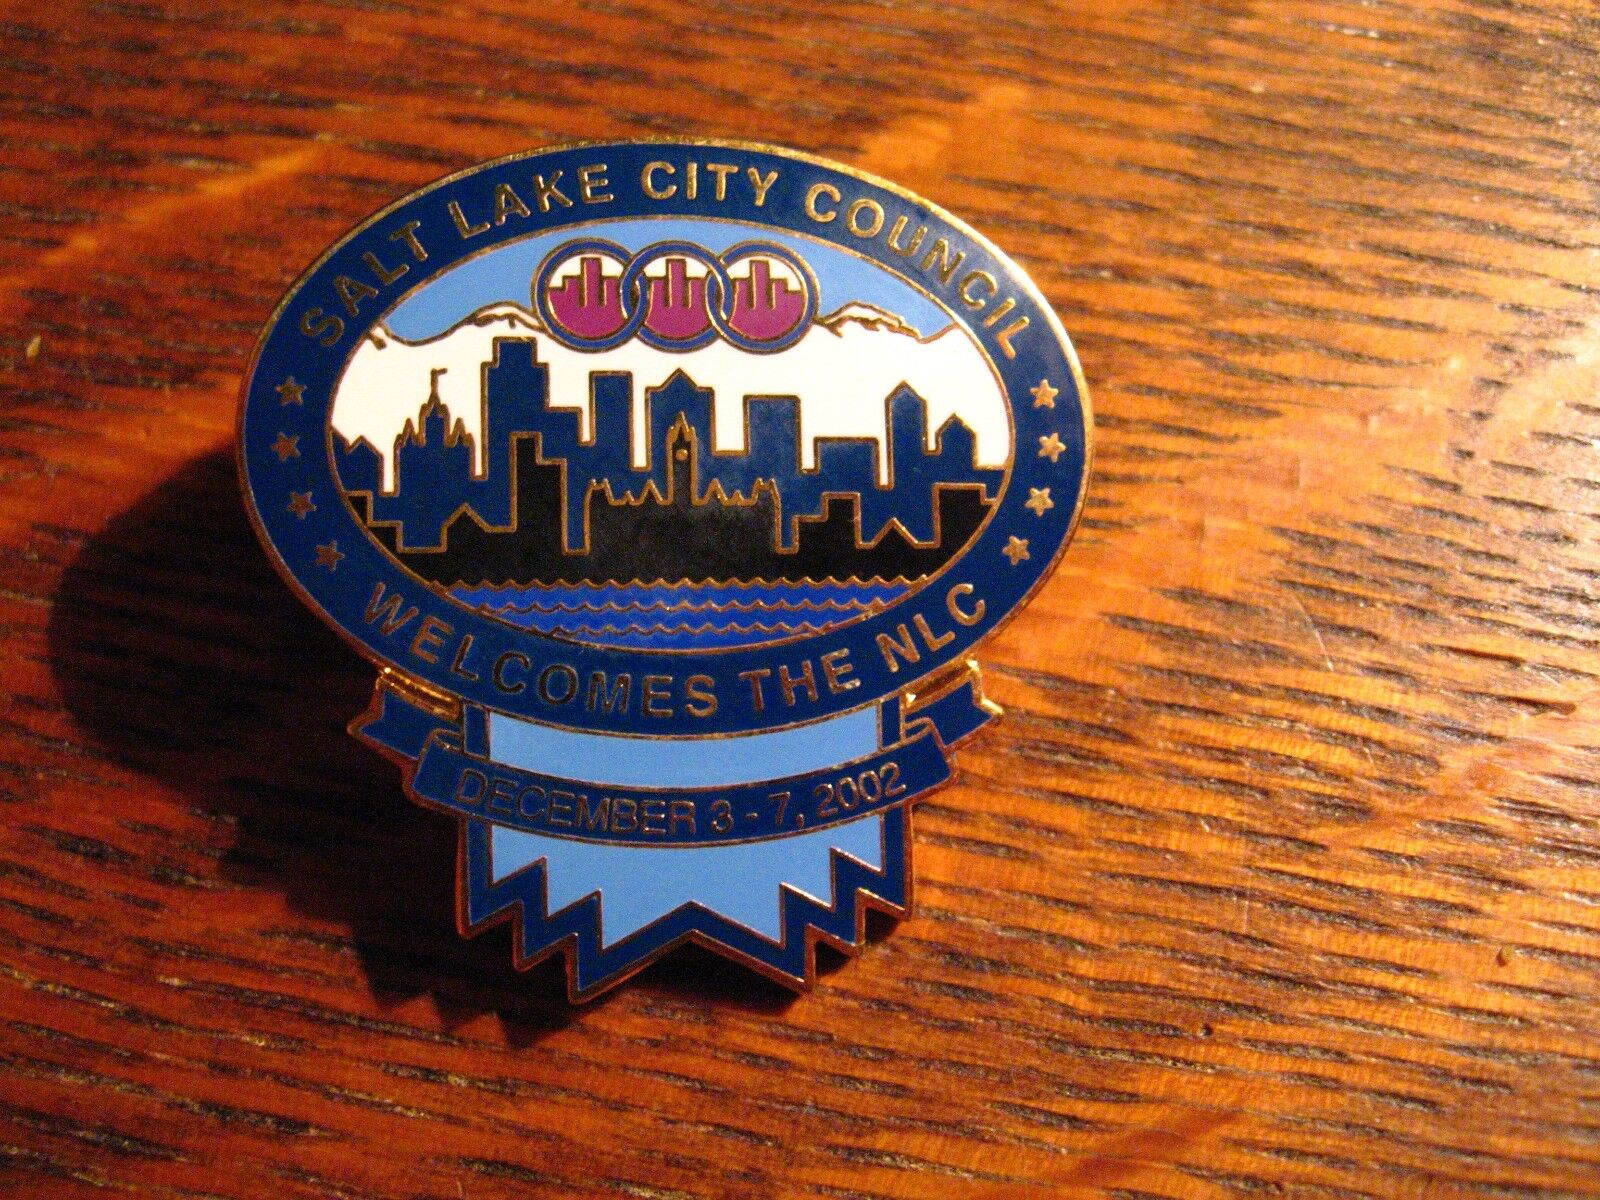 National League Of Cities Lapel Pin - Vintage 2002 Salt Lake City Congress Pin